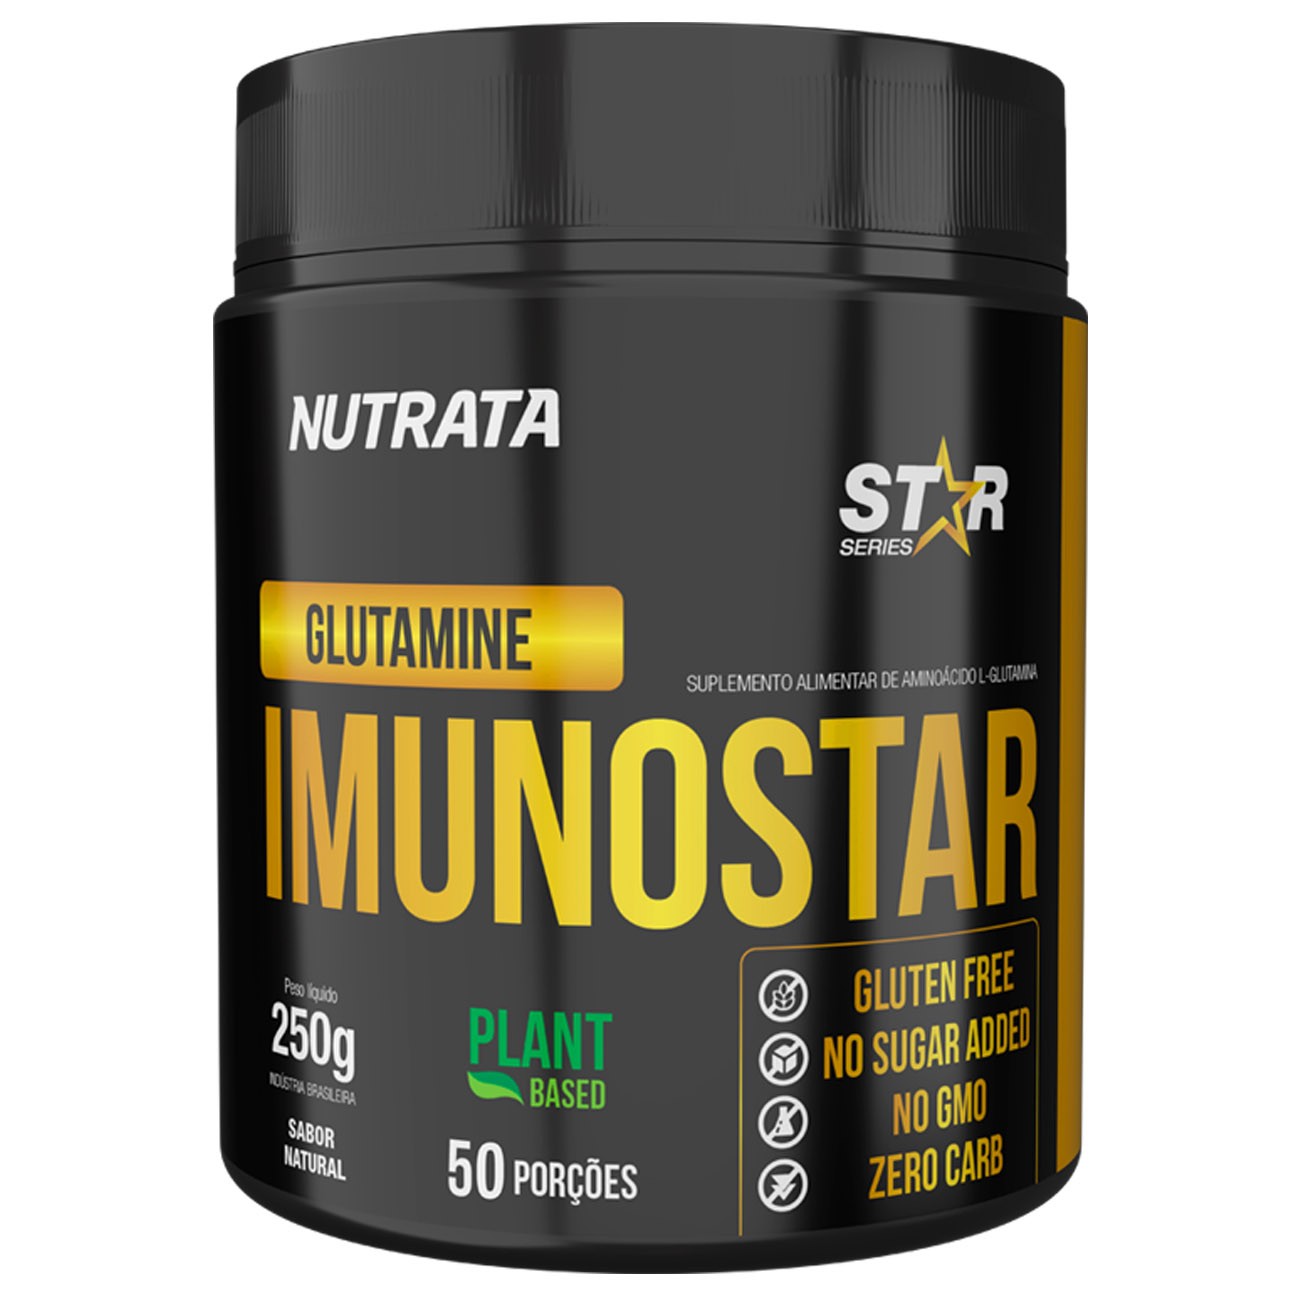 Glutamina Imunostar Star Series 250g - Nutrata